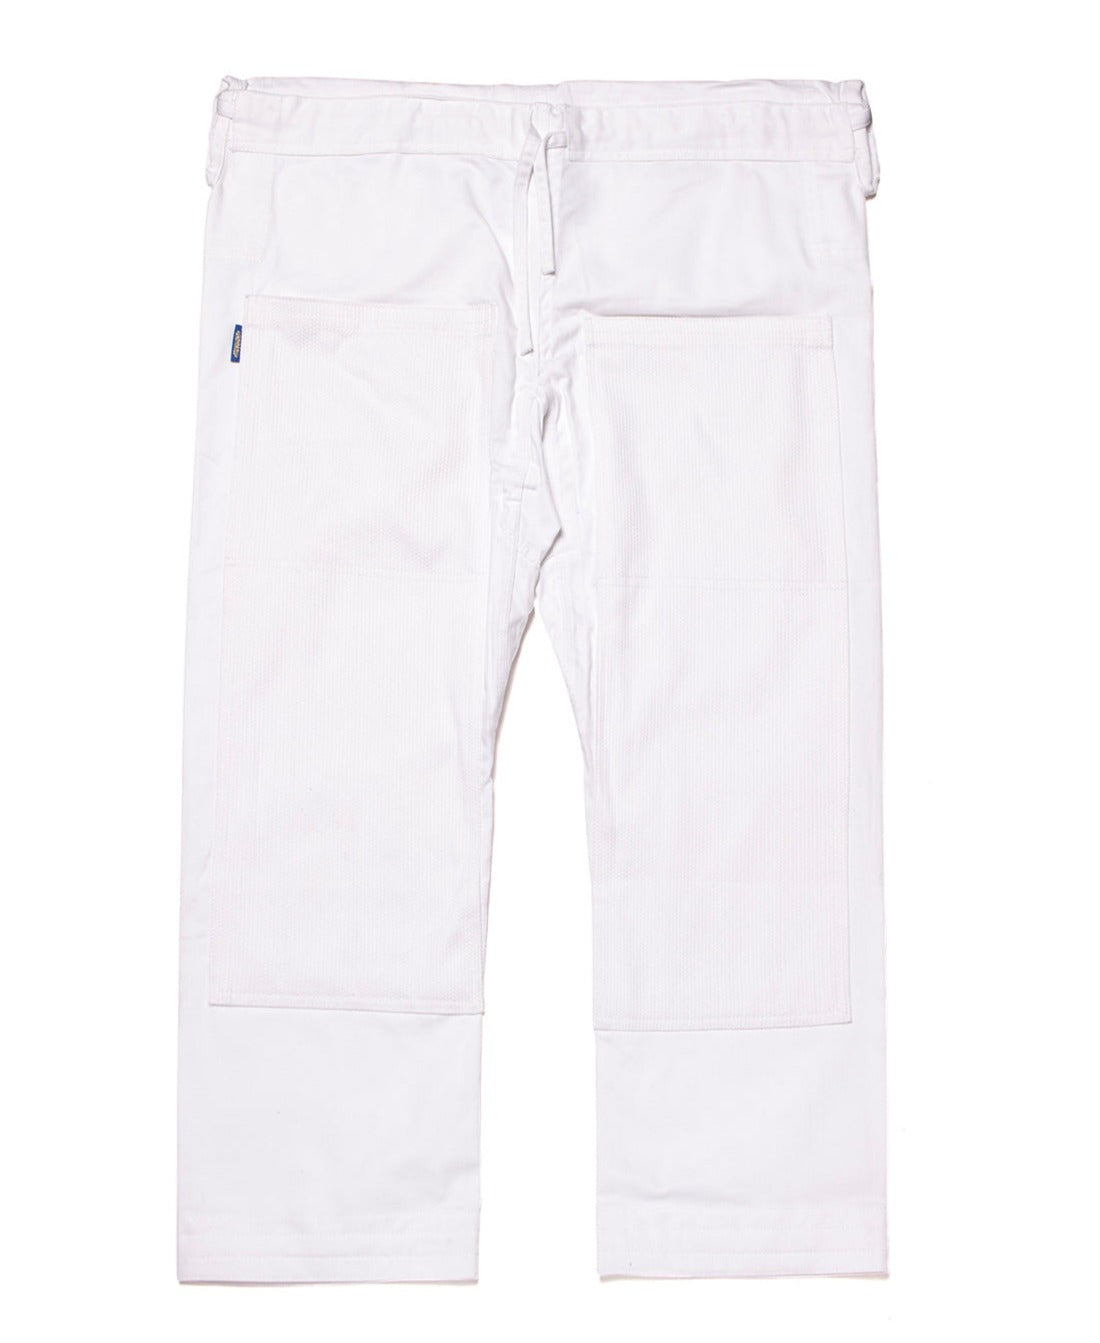 Garden Gi Pants (White)